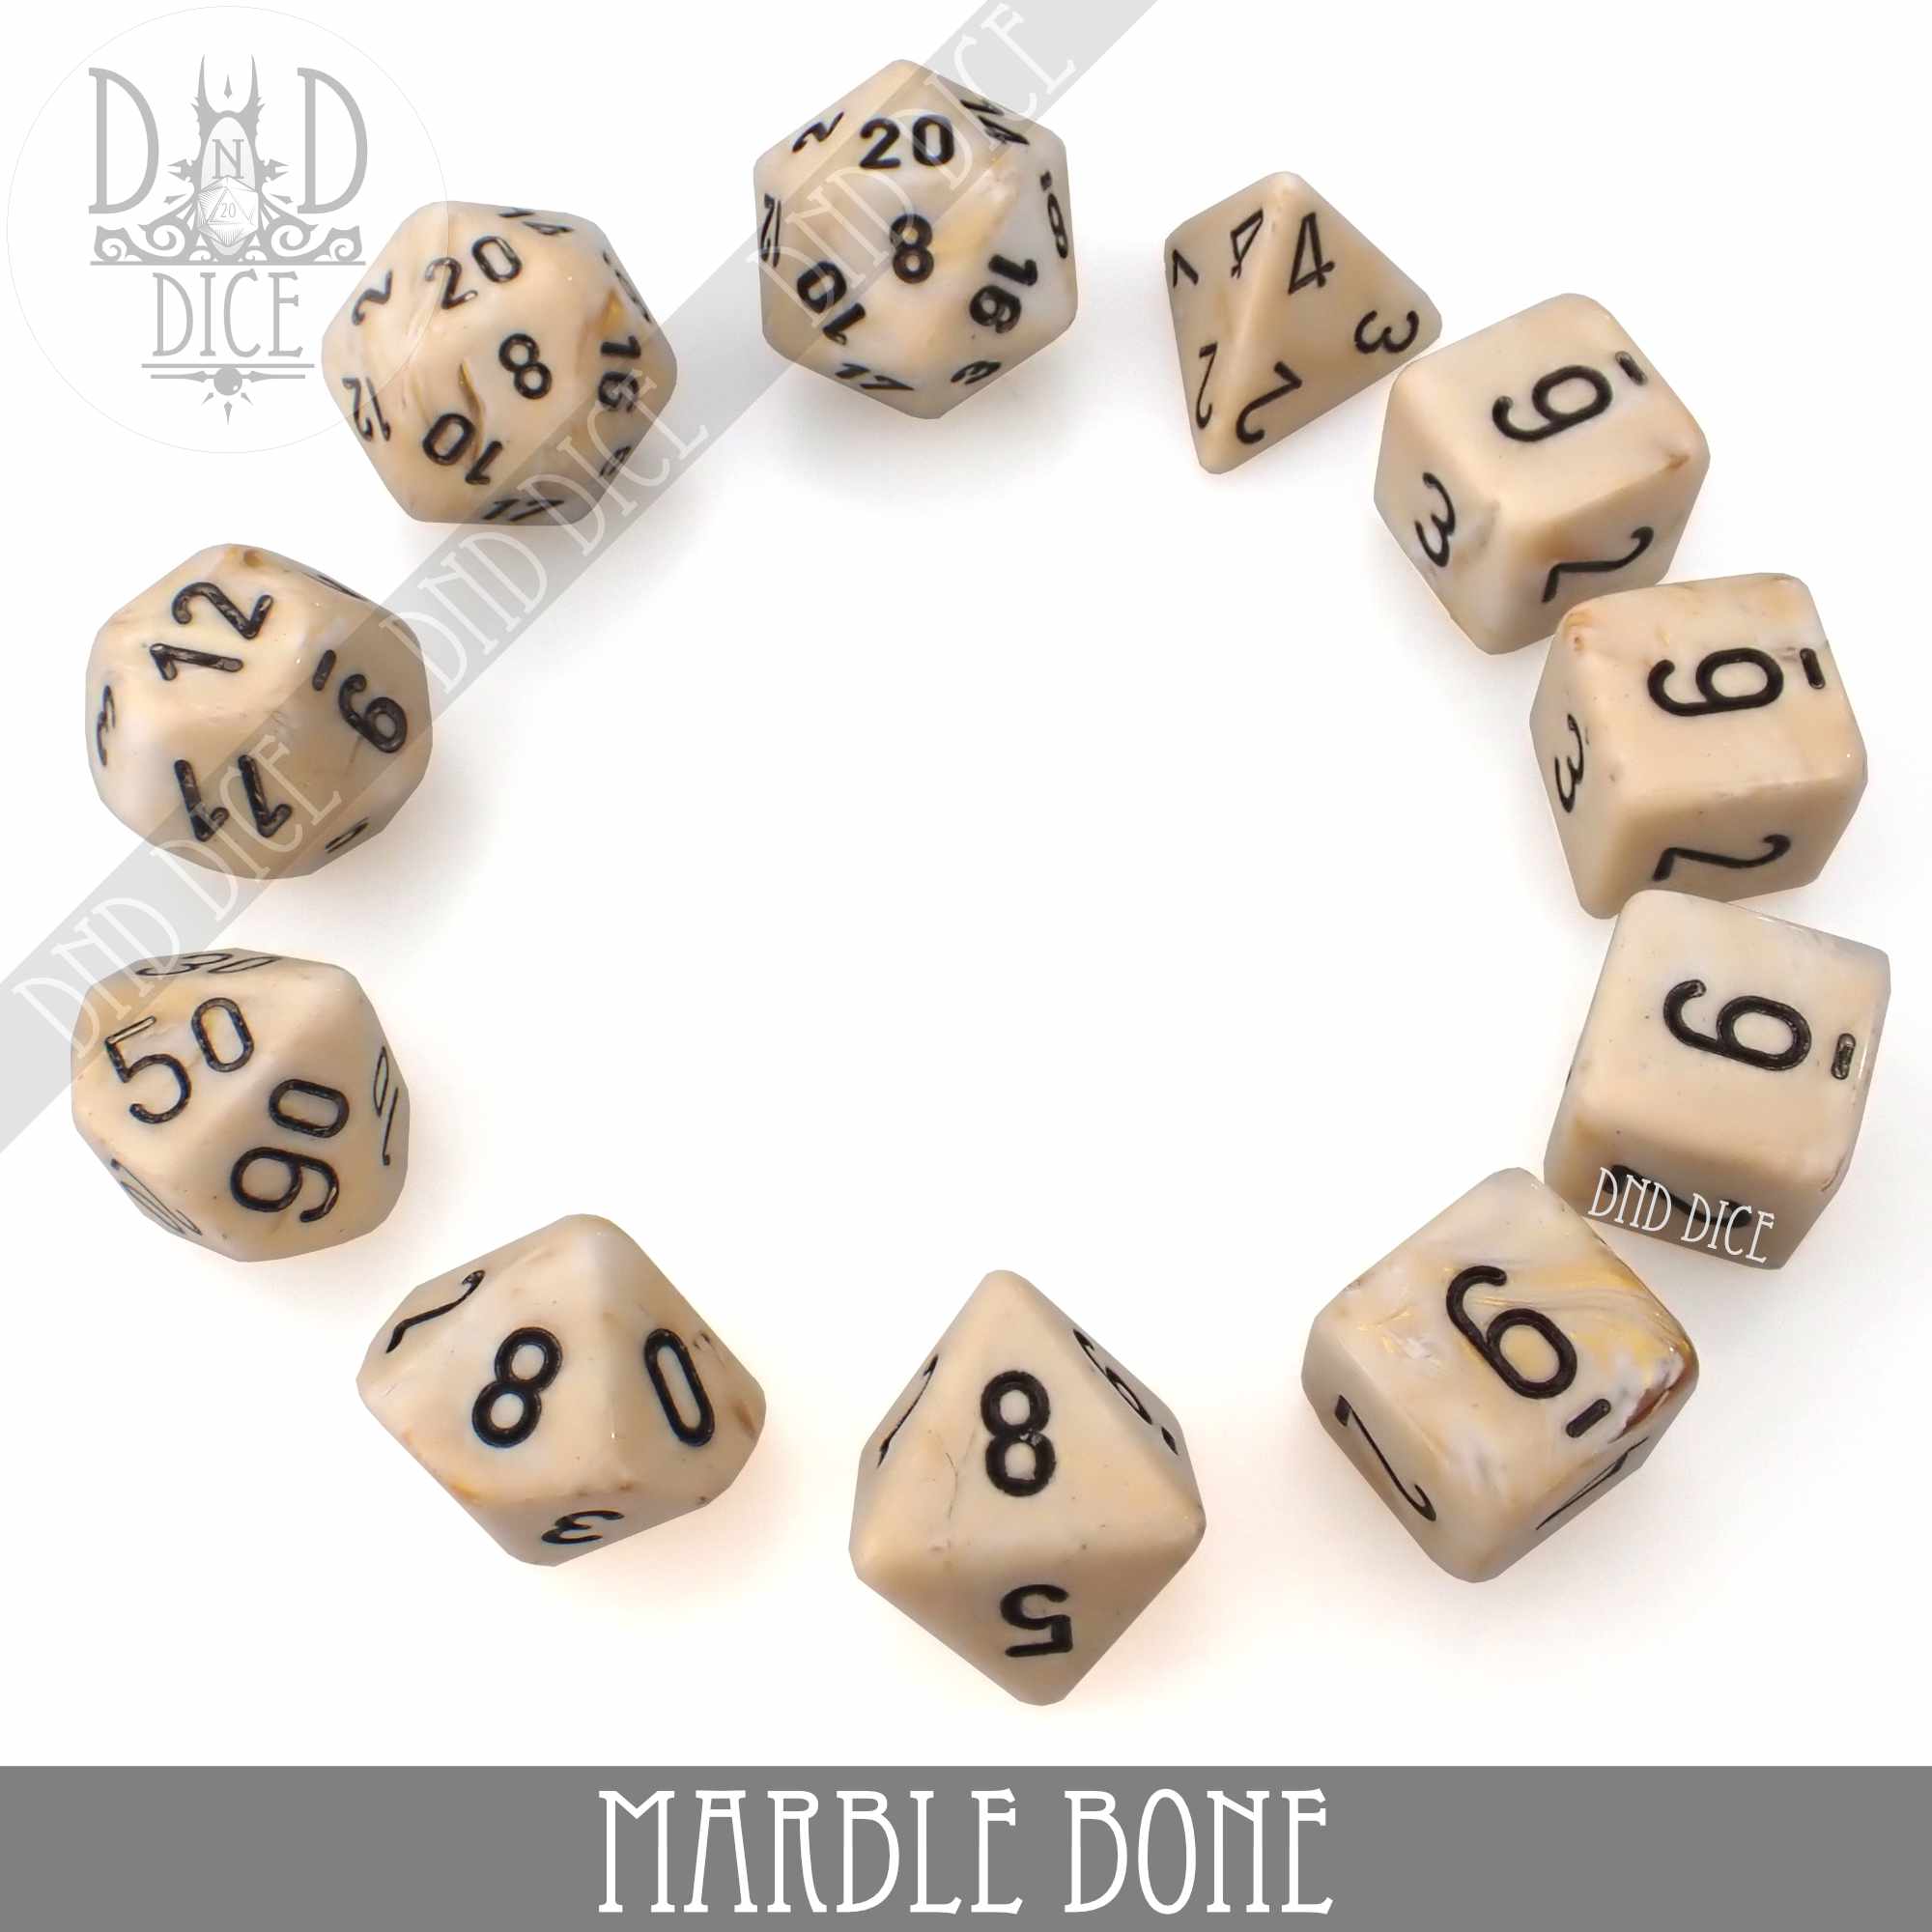 Marble Bone 7 or 11 Dice Set